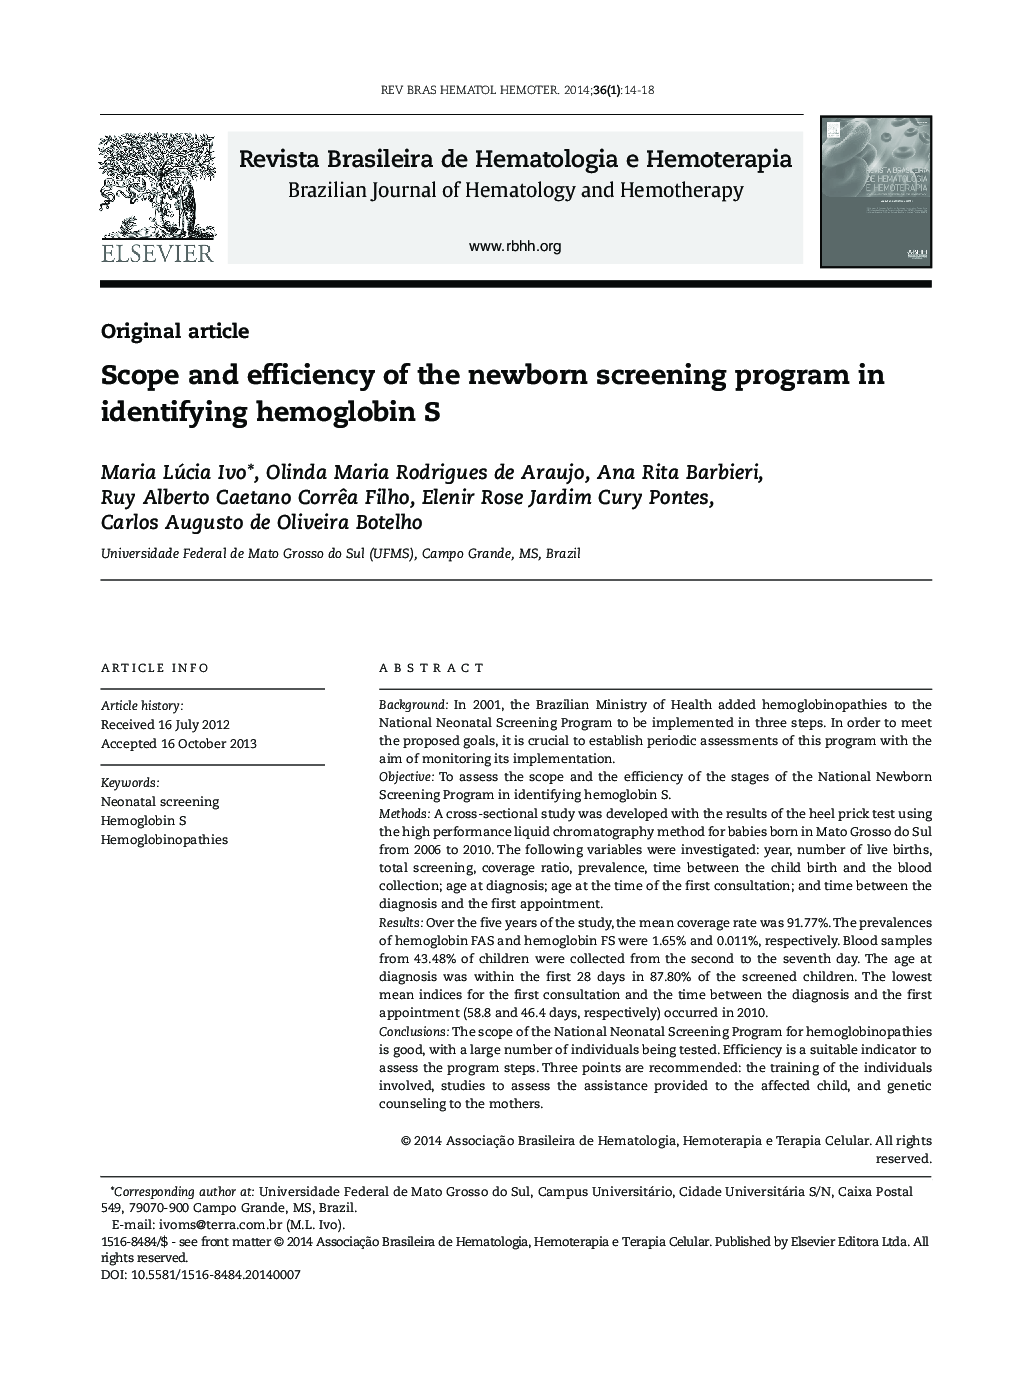 Scope and efficiency of the newborn screening program in identifying hemoglobin S